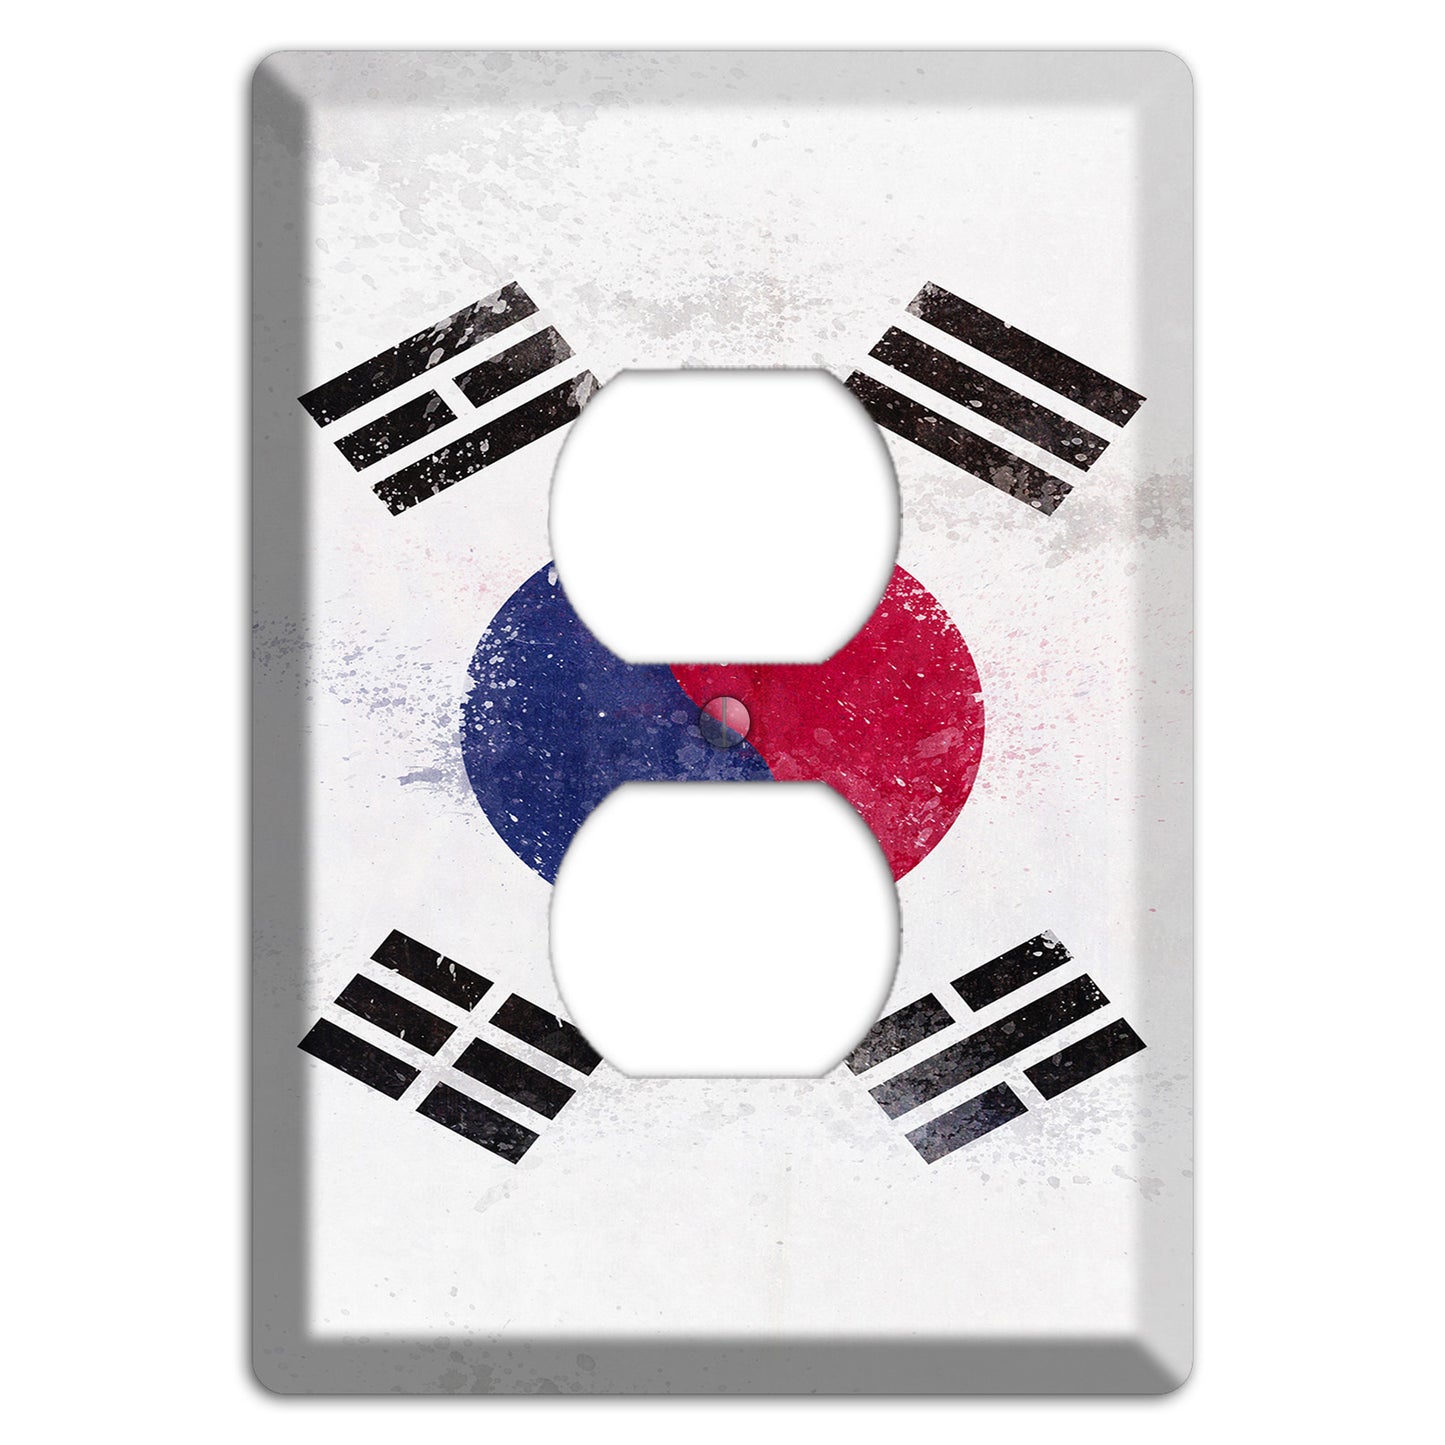 Korea South Cover Plates Duplex Outlet Wallplate